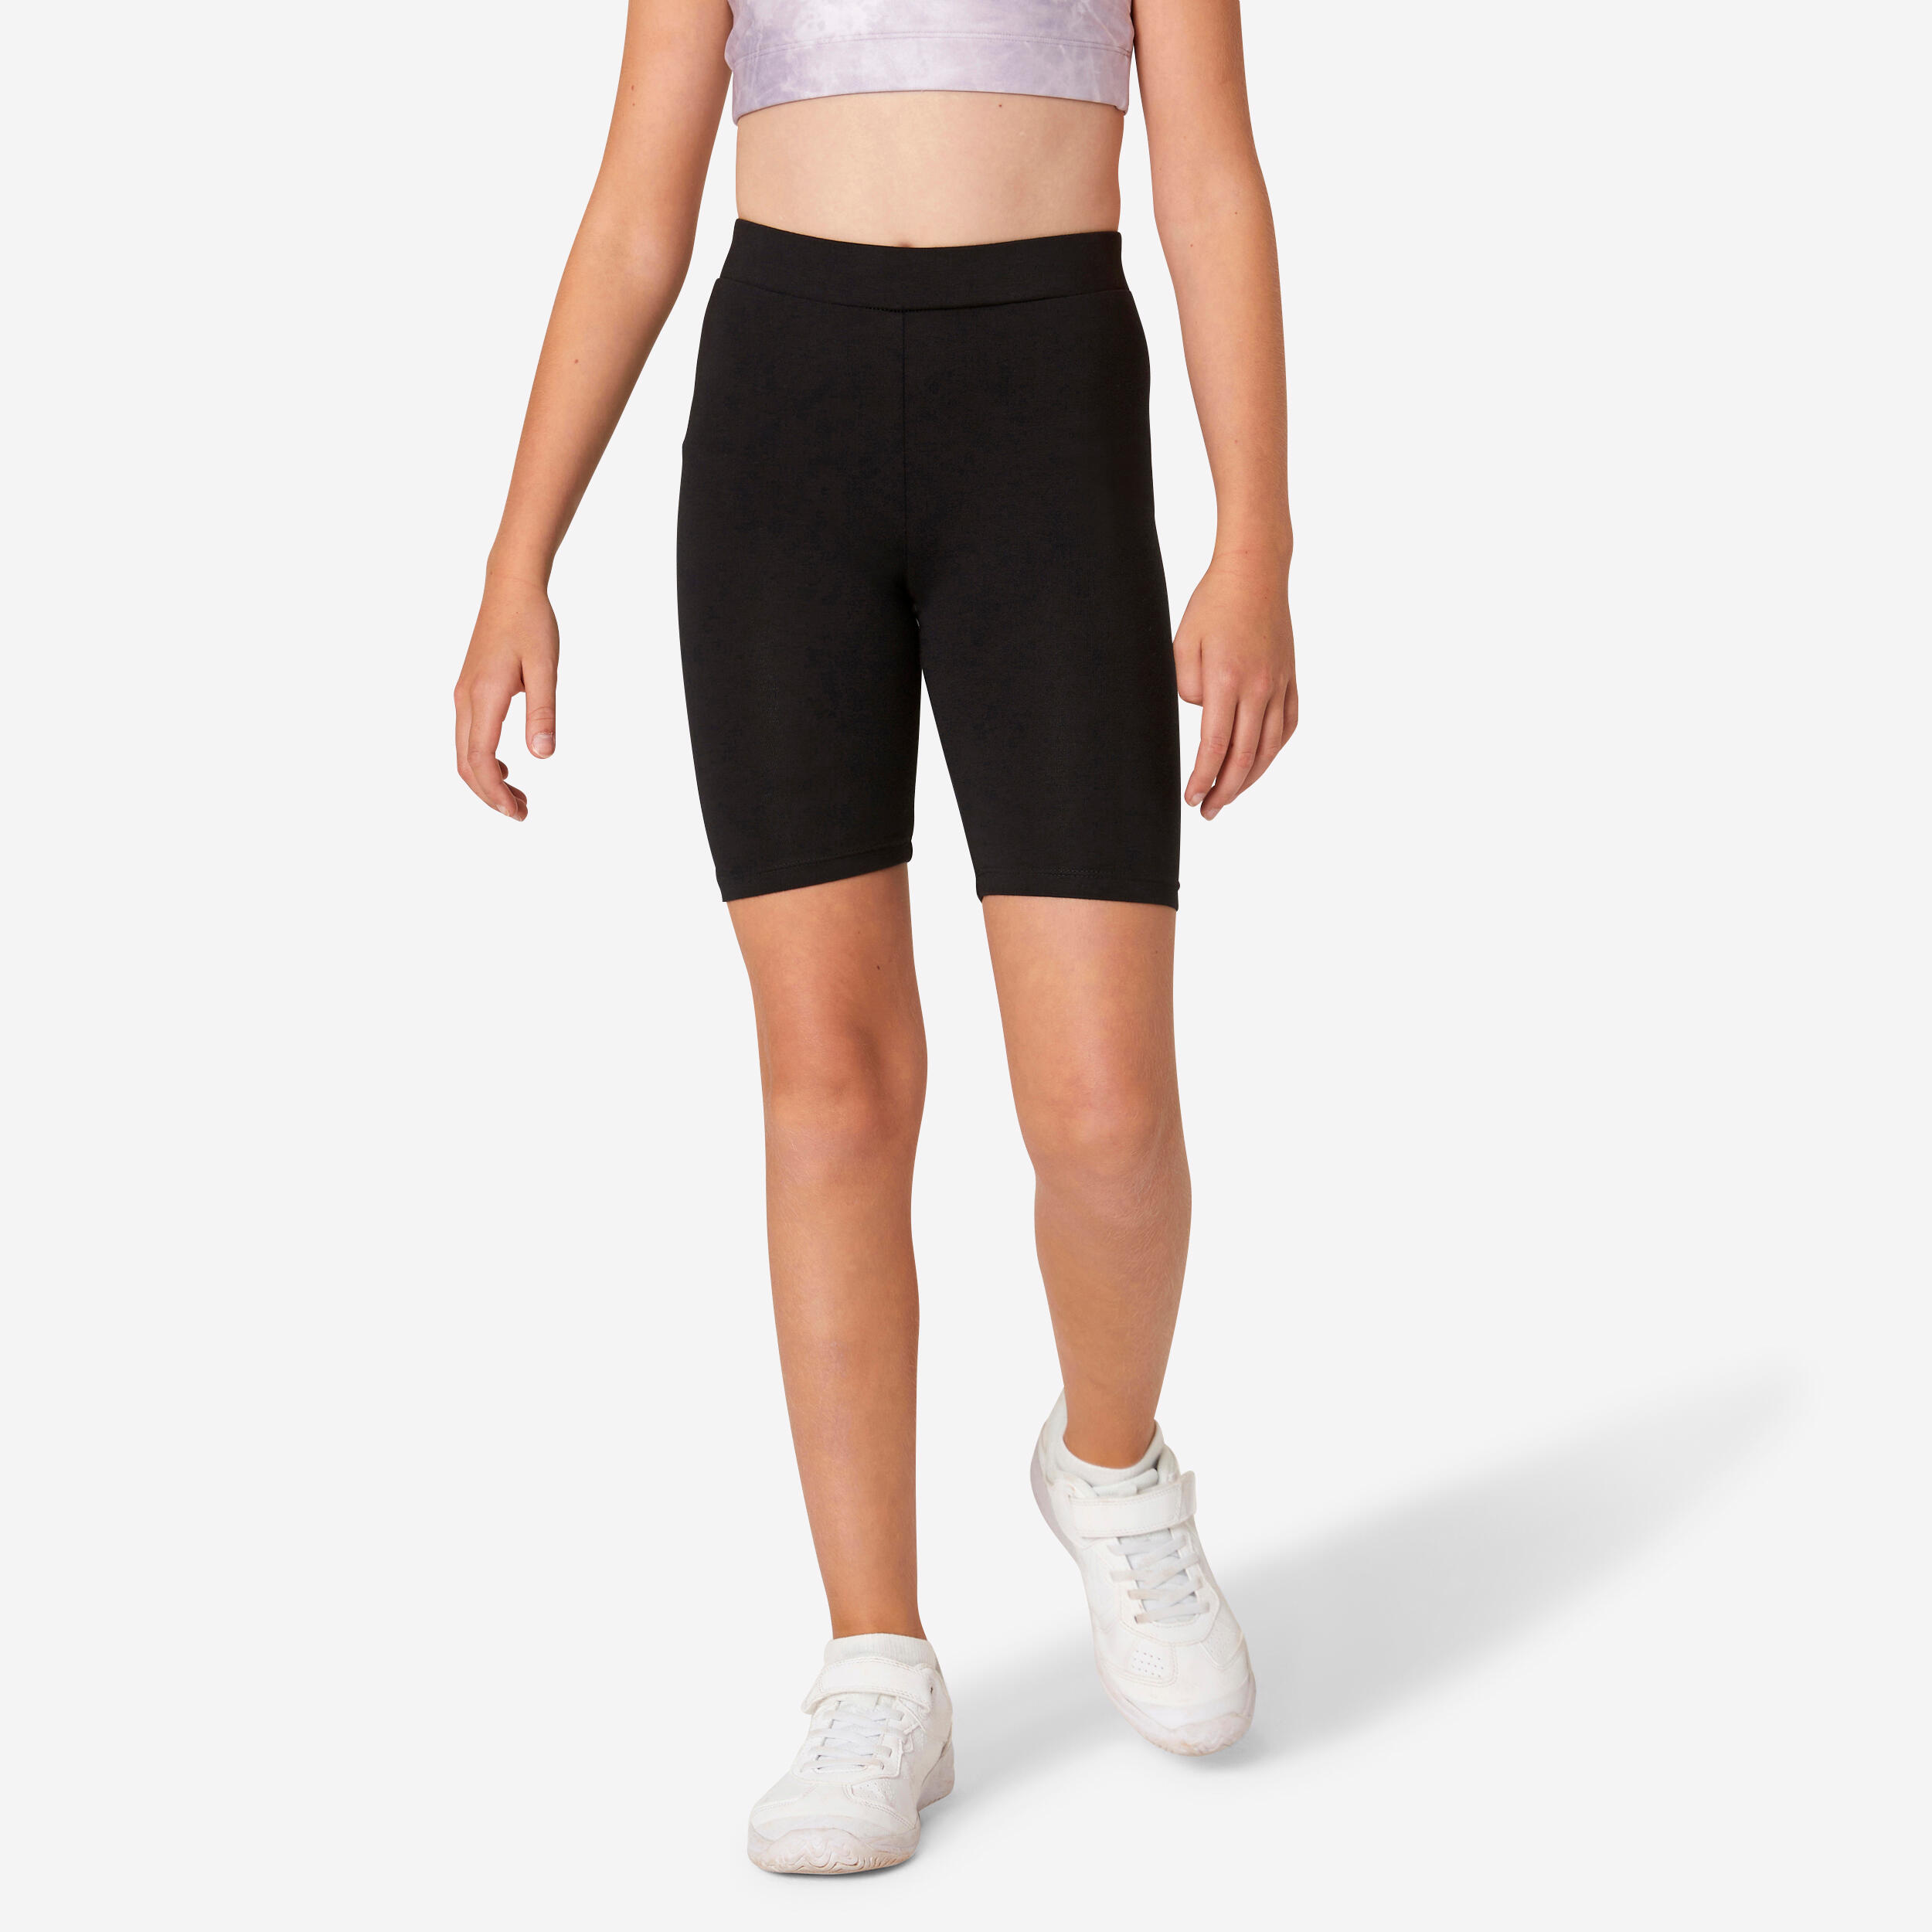 DOMYOS Girls' Cotton Cycling Shorts - Black